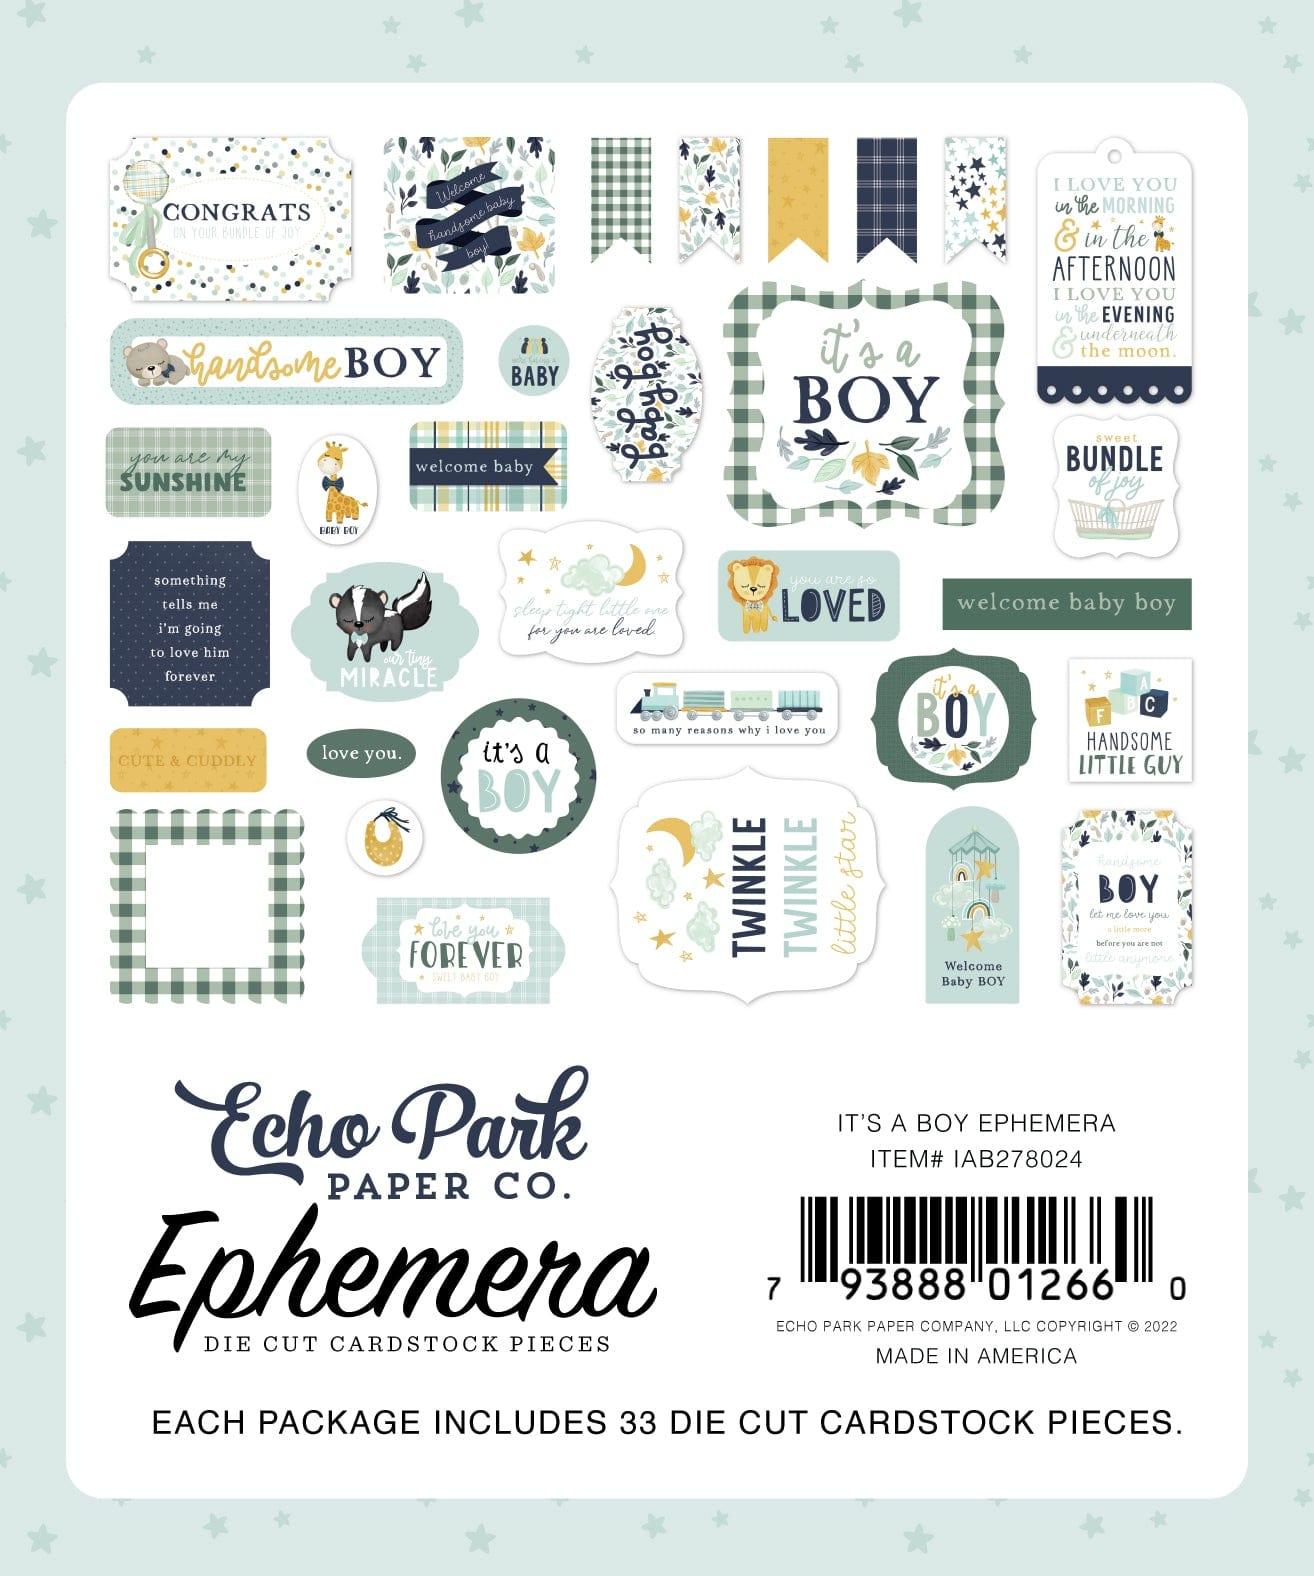 It's A Boy Collection 5 x 5 Scrapbook Ephemera Die Cuts by Echo Park Paper - Scrapbook Supply Companies